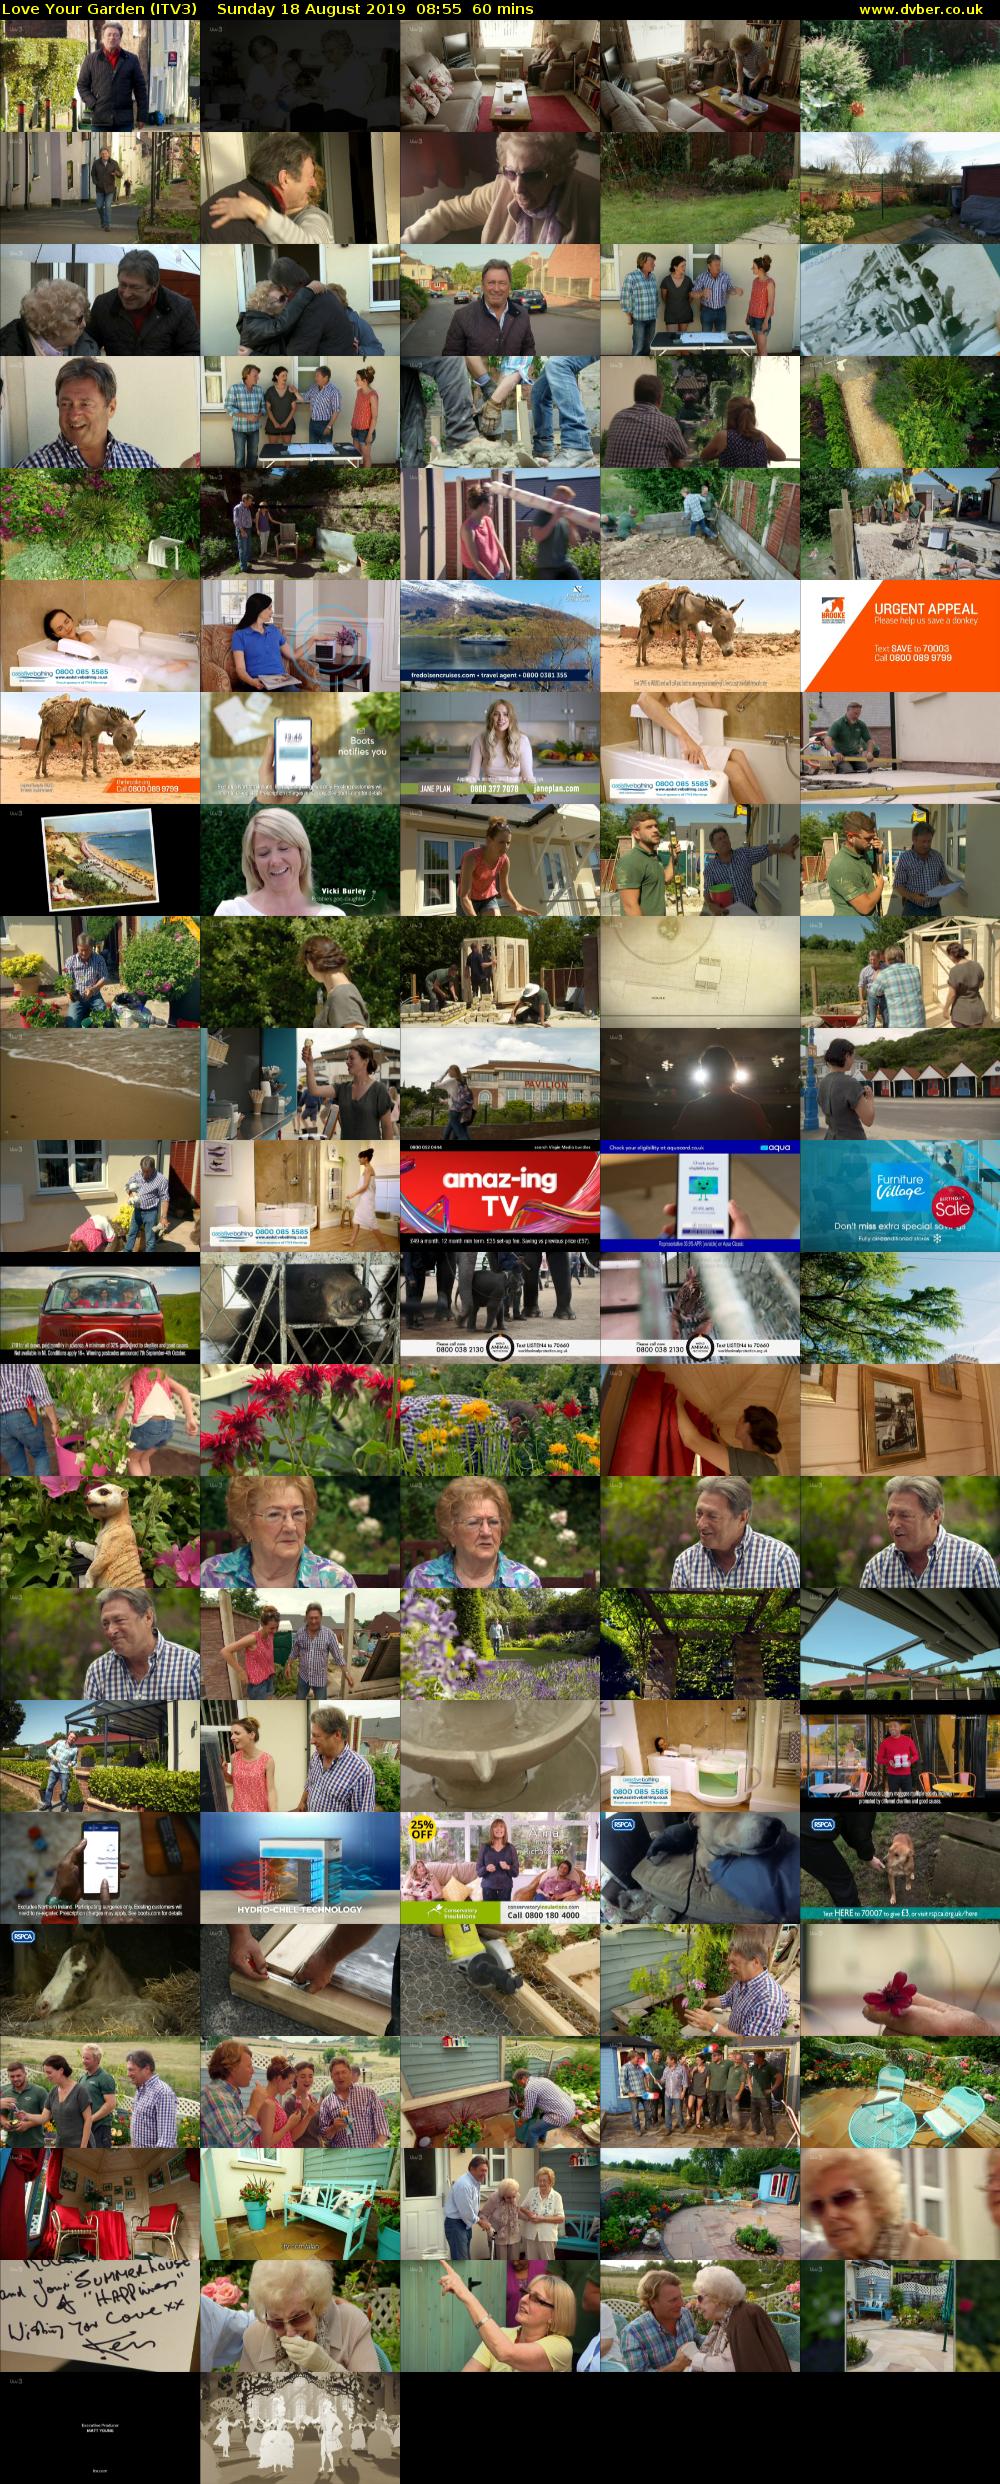 Love Your Garden (ITV3) Sunday 18 August 2019 08:55 - 09:55